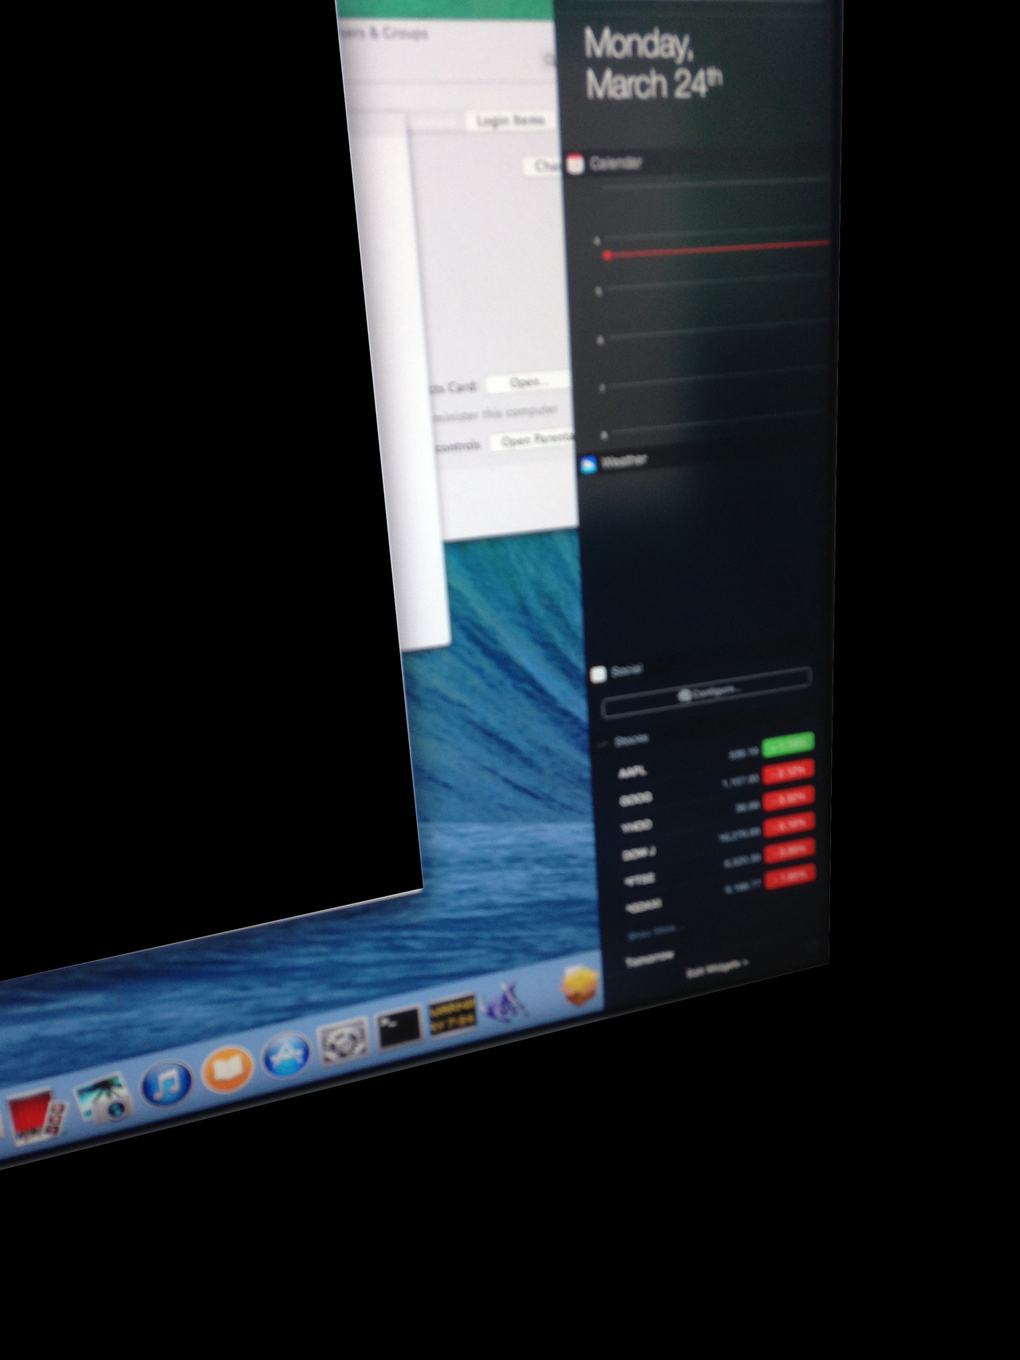 OS X 10.10 UI leak (Notification Center 001)